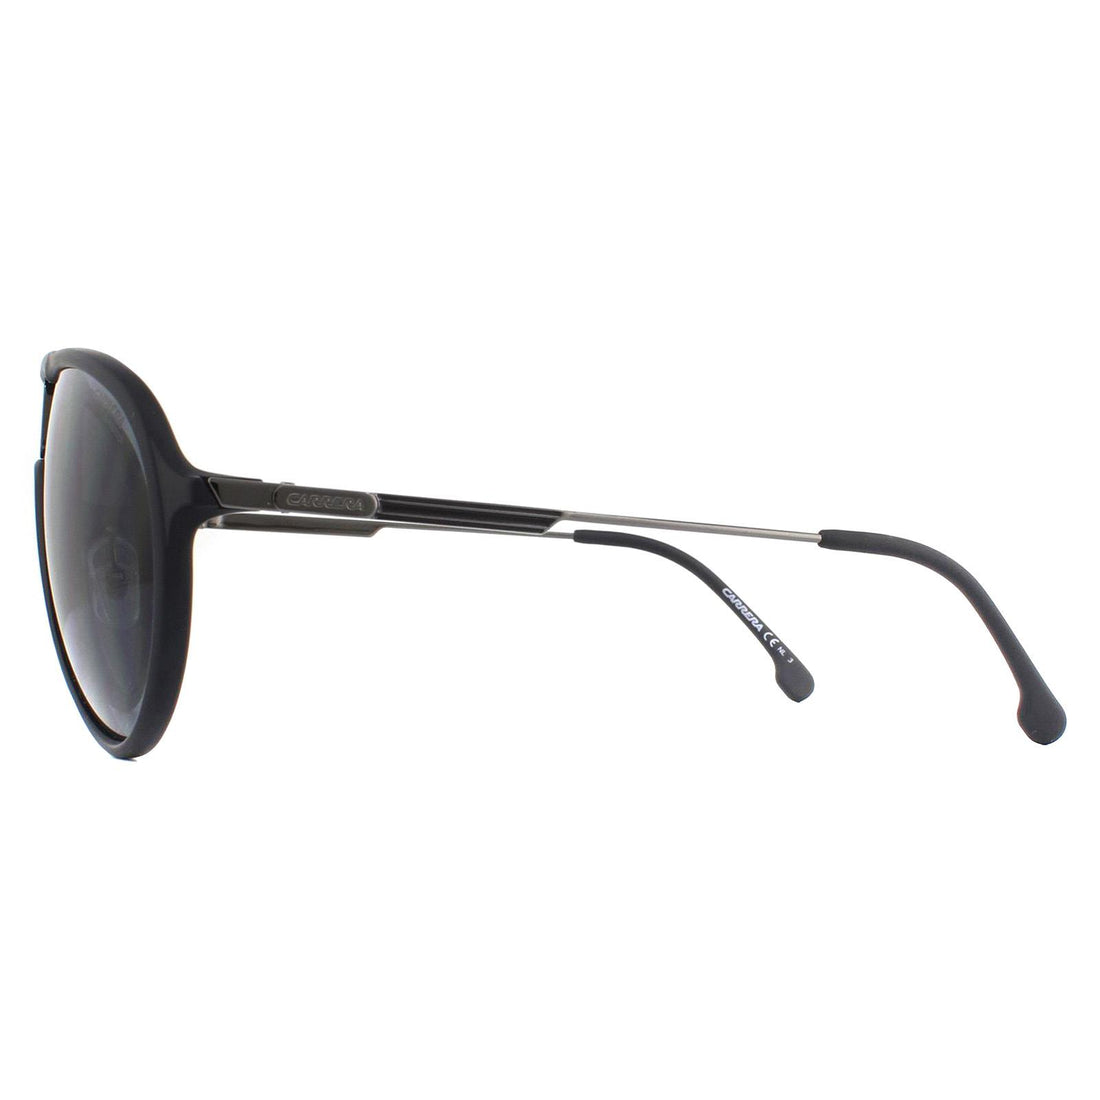 Carrera Sunglasses 1026/S 003 IR Matte Black Grey